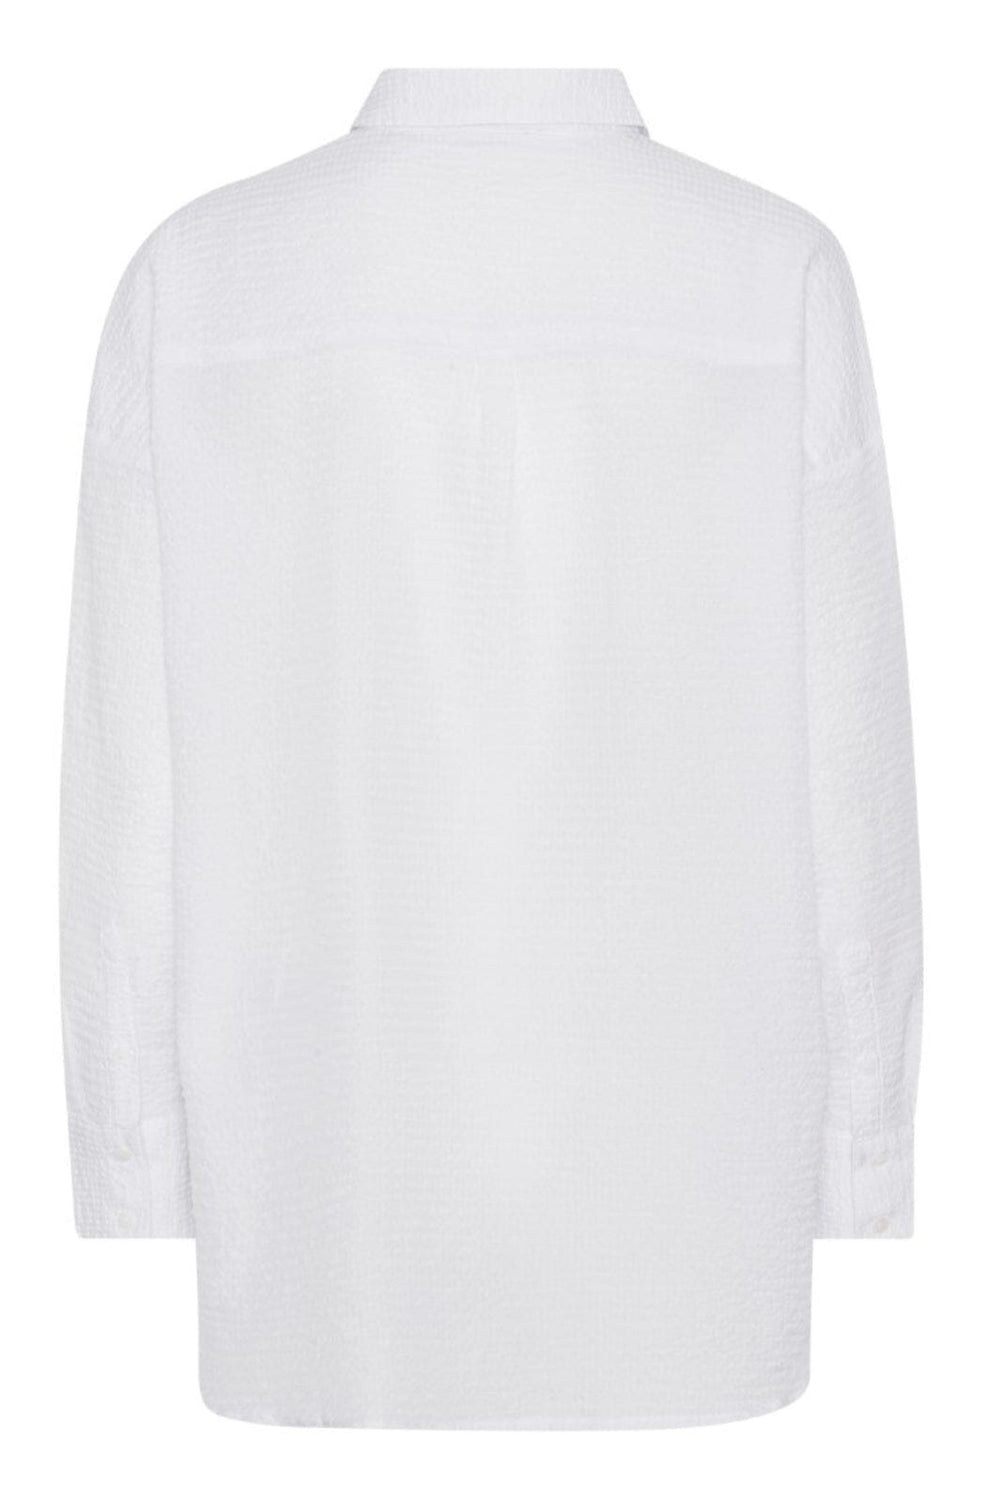 A-View - Sonja Shirt - 000 White Skjorter 